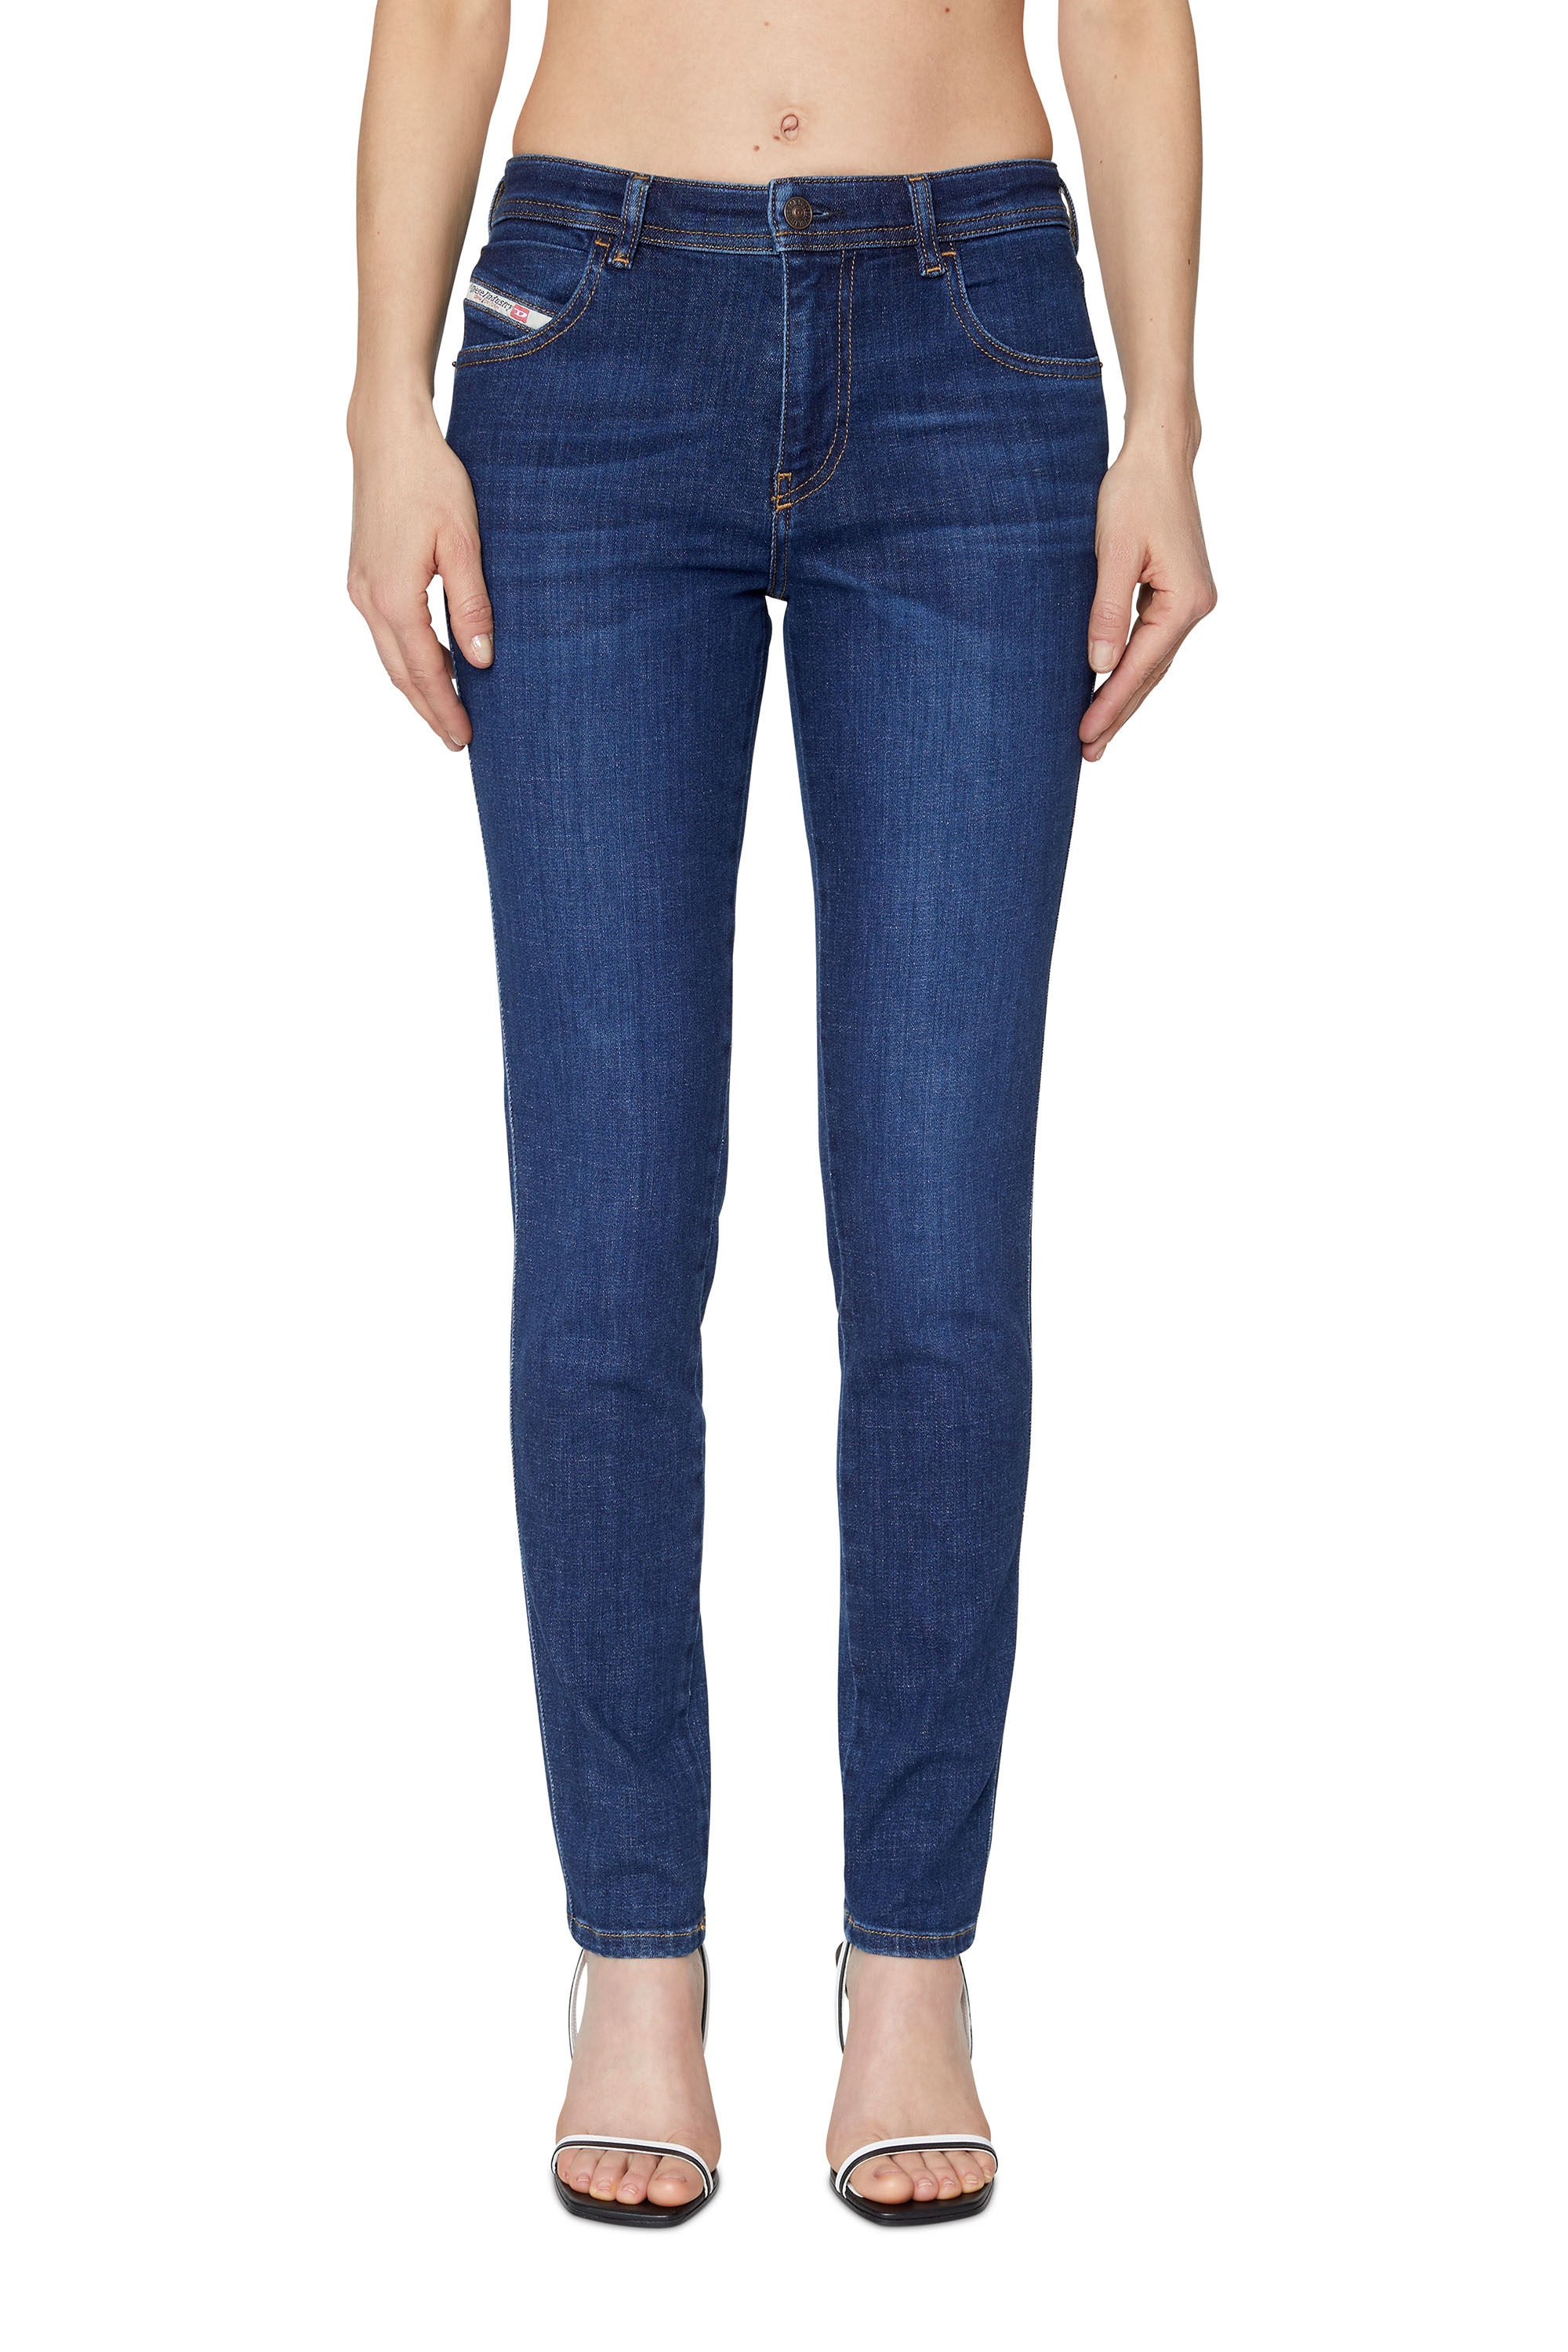 2015 BABHILA 09C58 Skinny Jeans, Dark Blue - Jeans